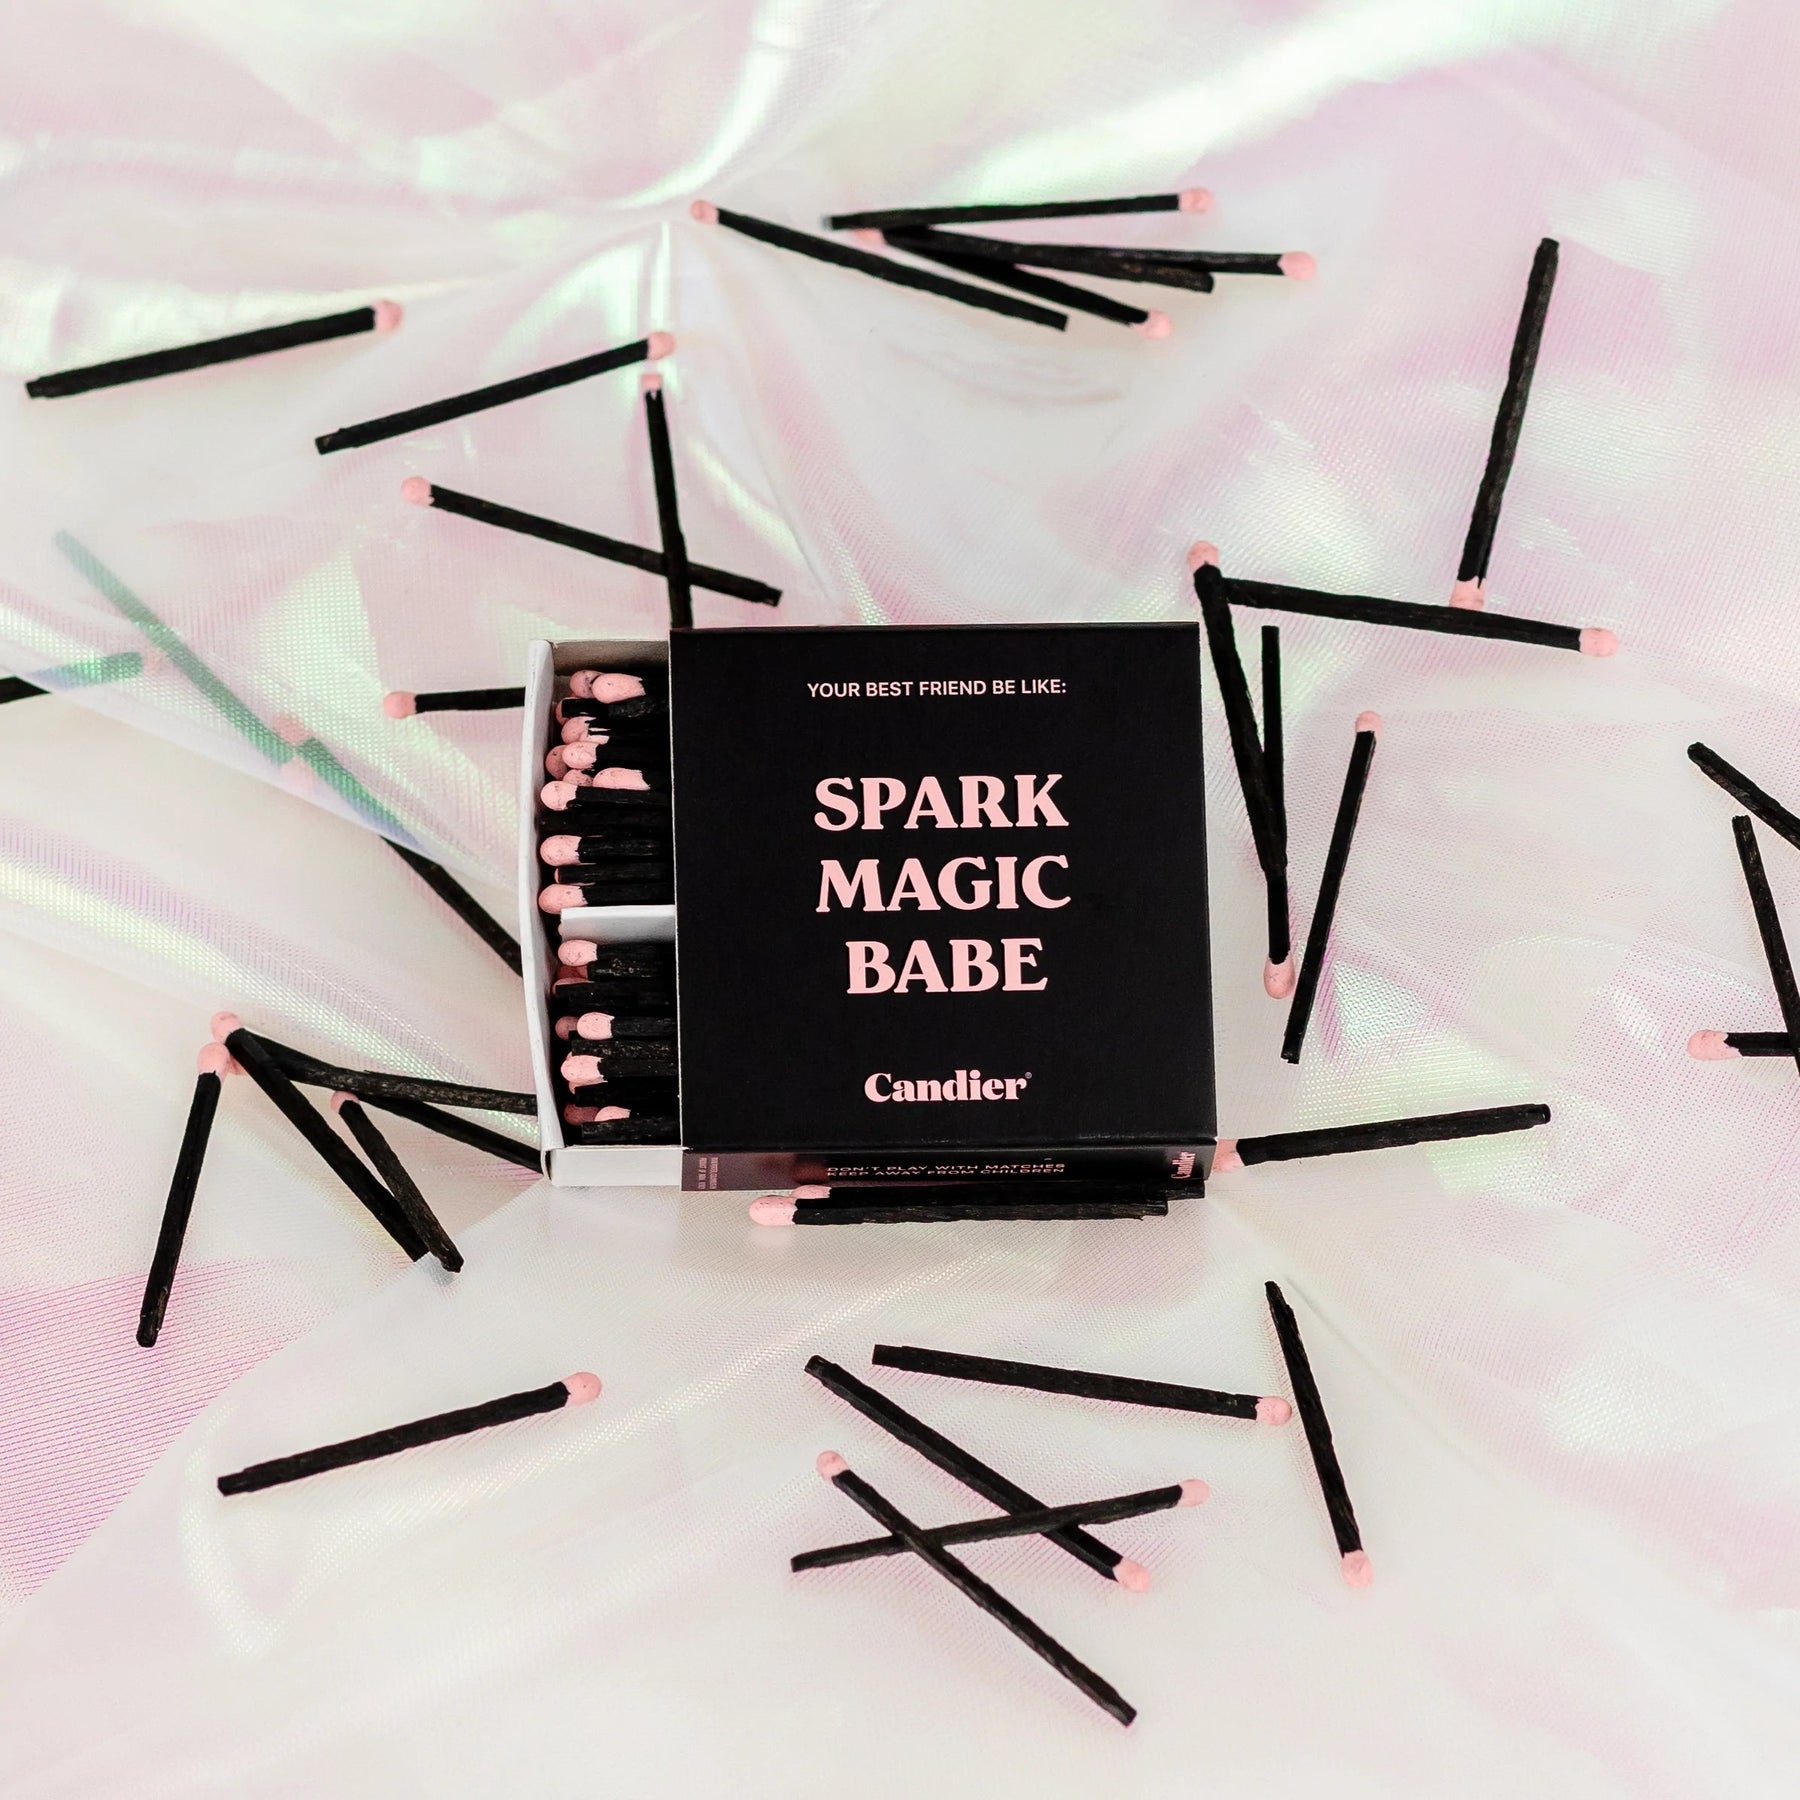 Magic Matches - Blend Box